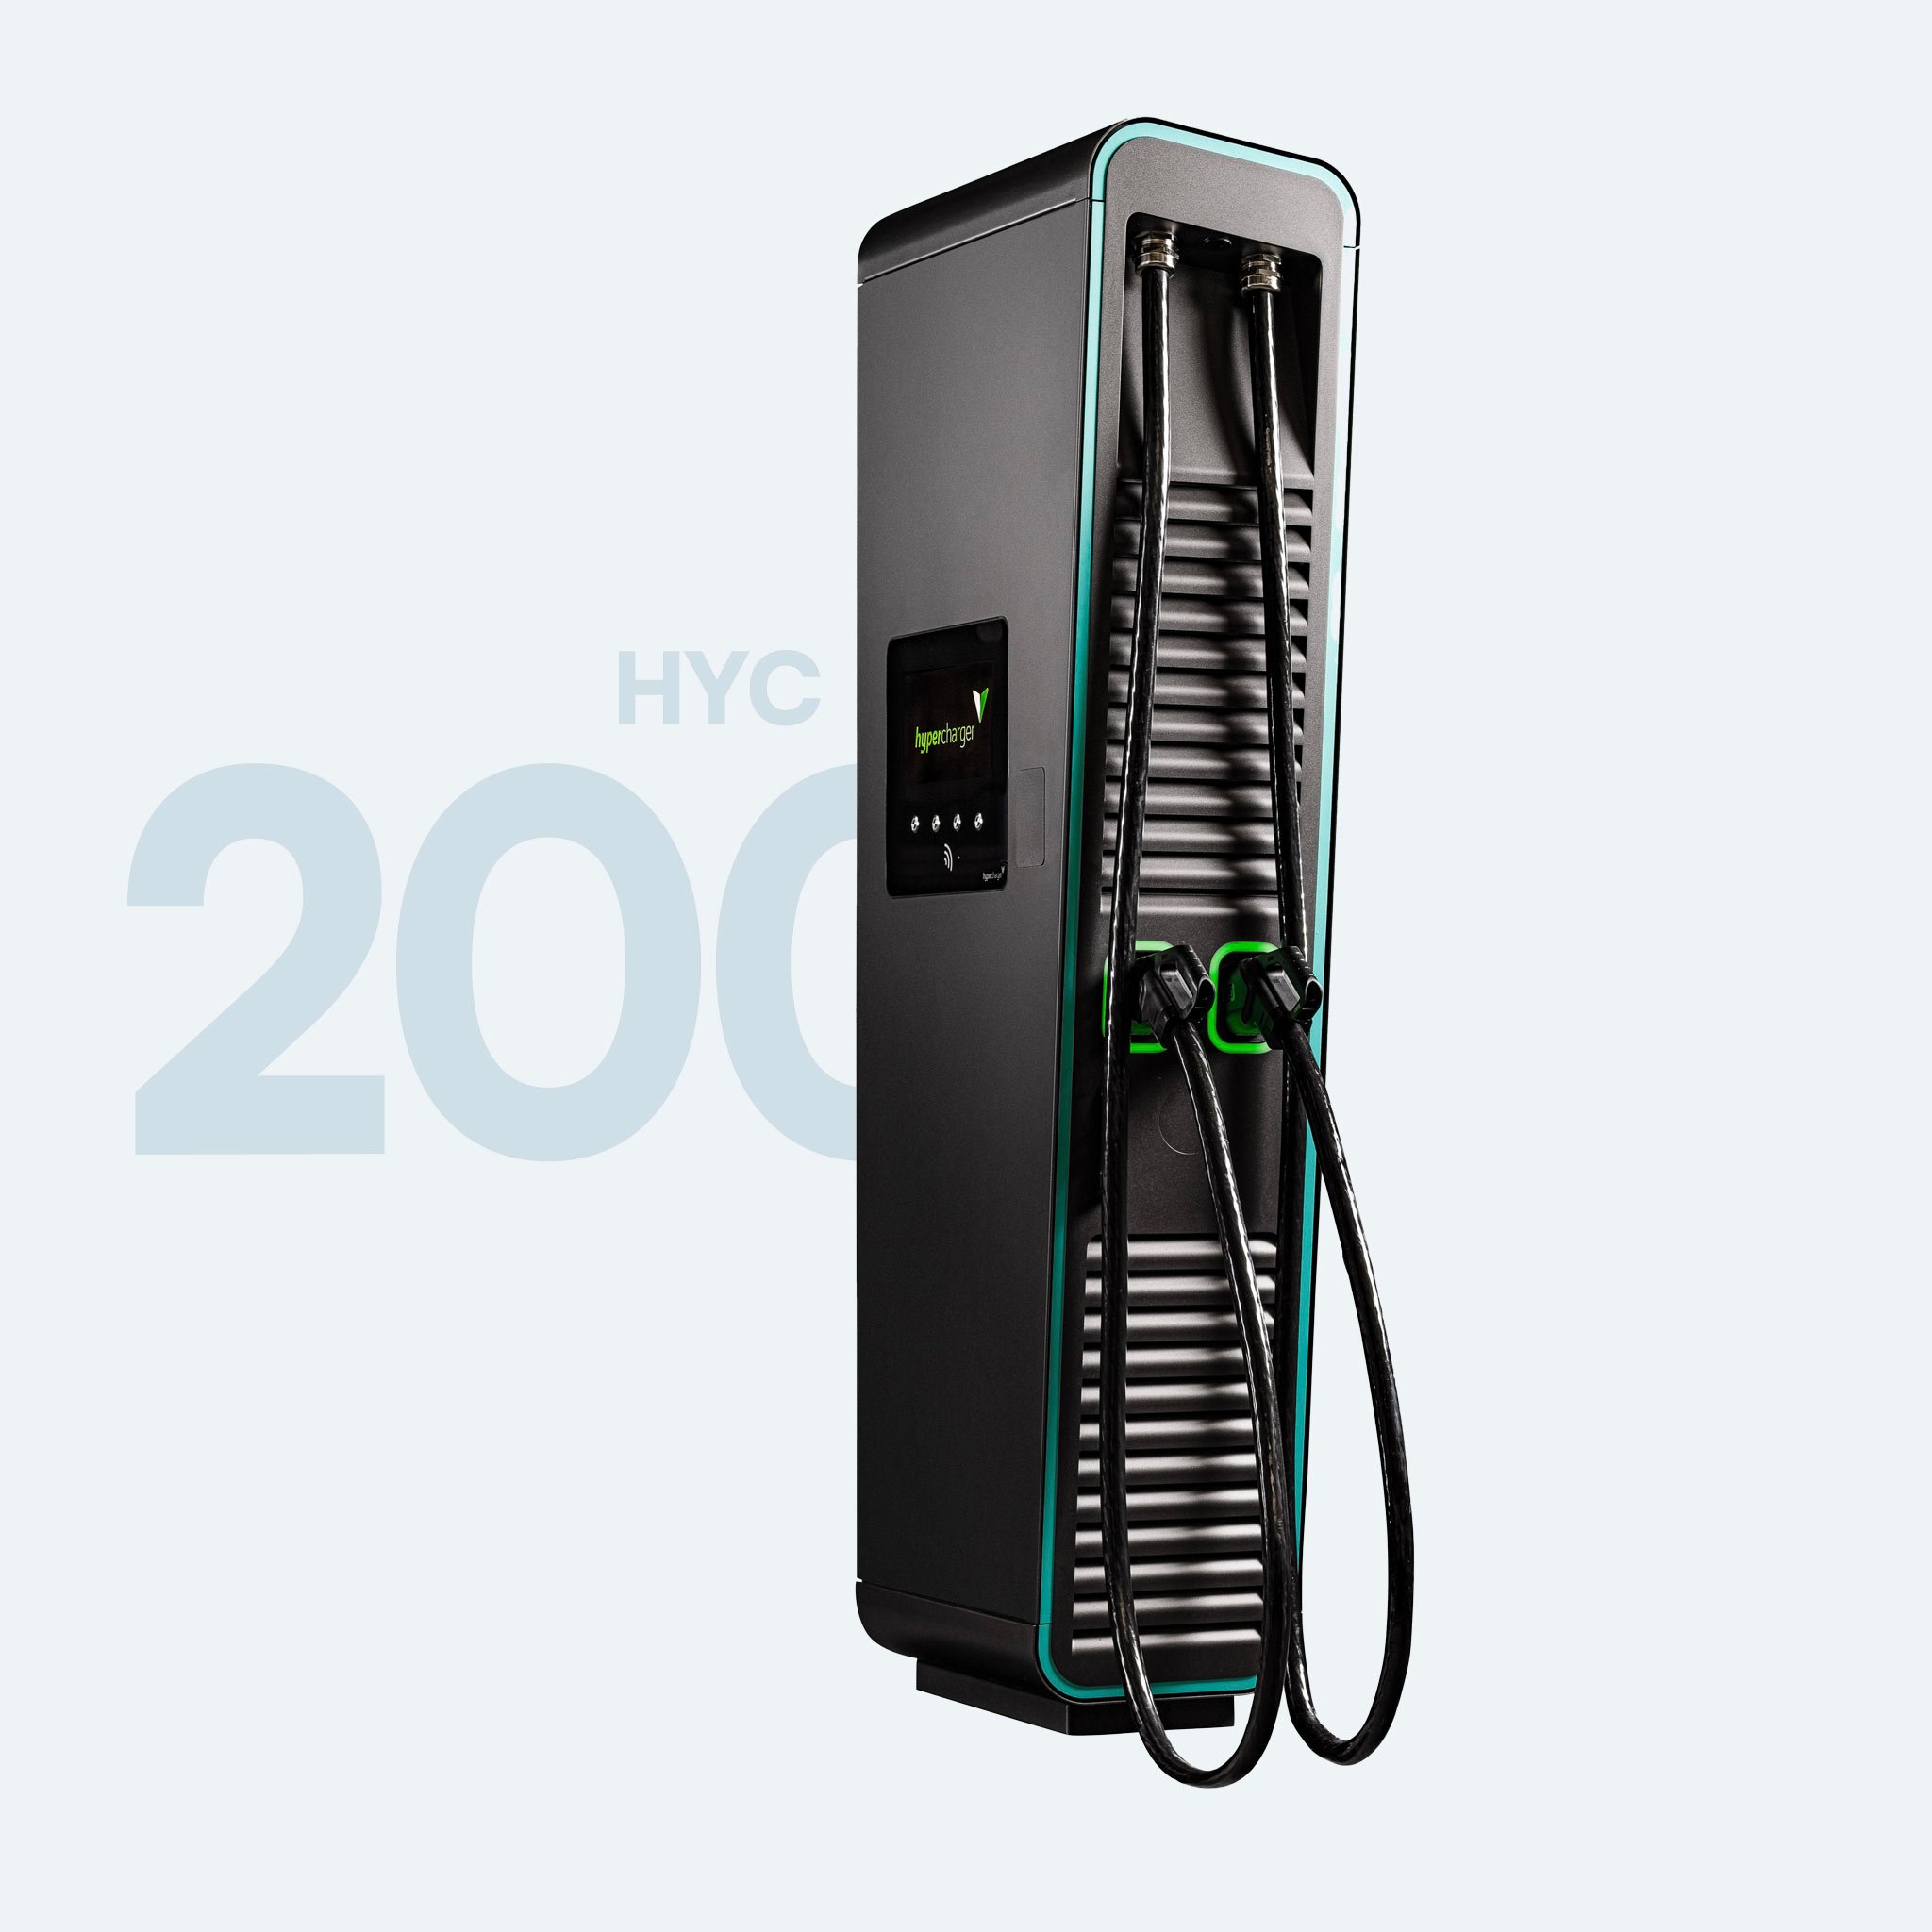 alpitronic hypercharger HYC 200 Schnellladestation - Individuell konfigurierbar